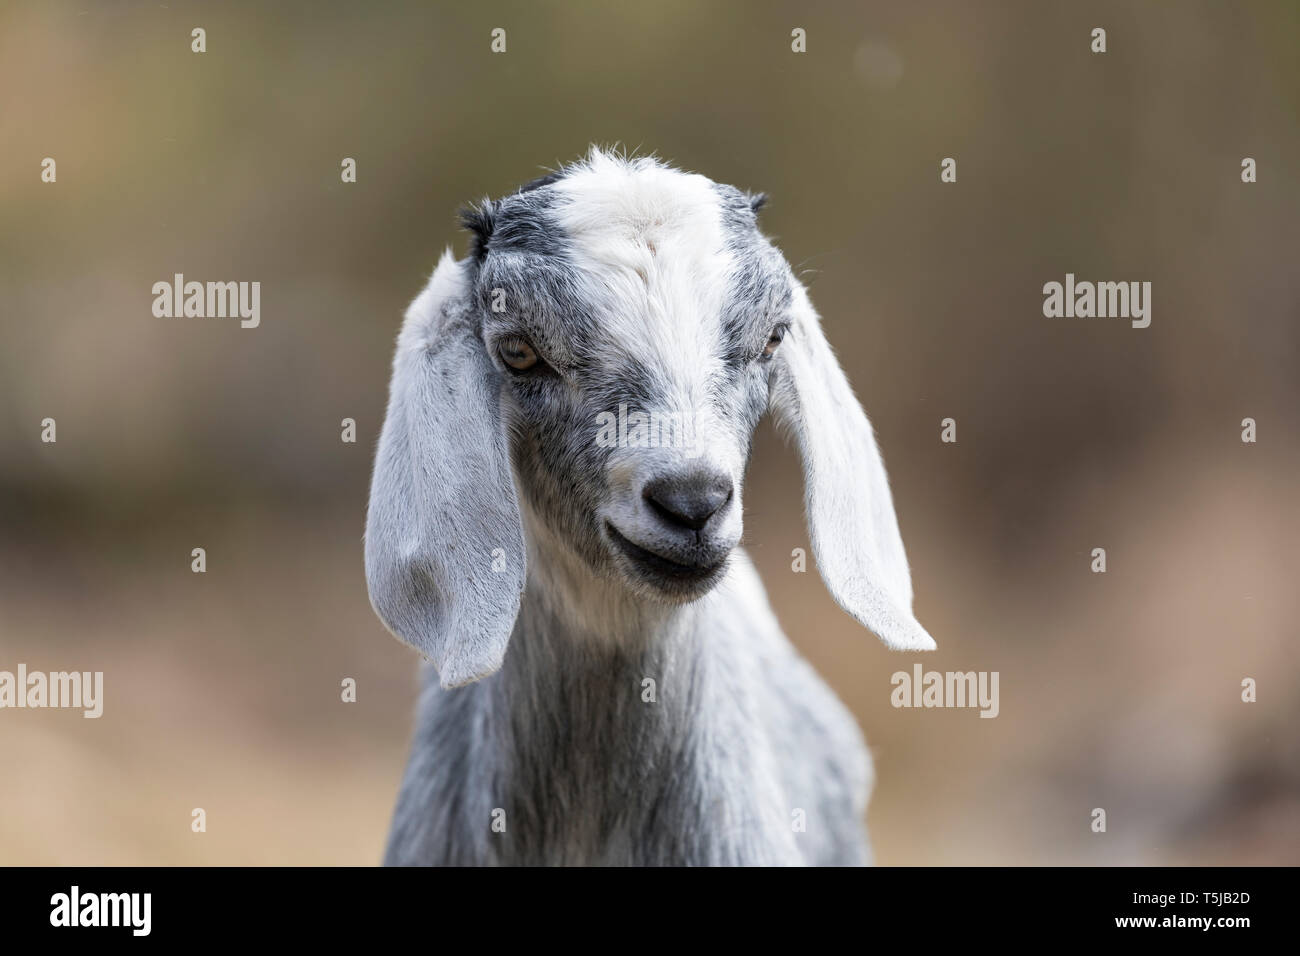 cute Baby goat posing camera Stock Photo